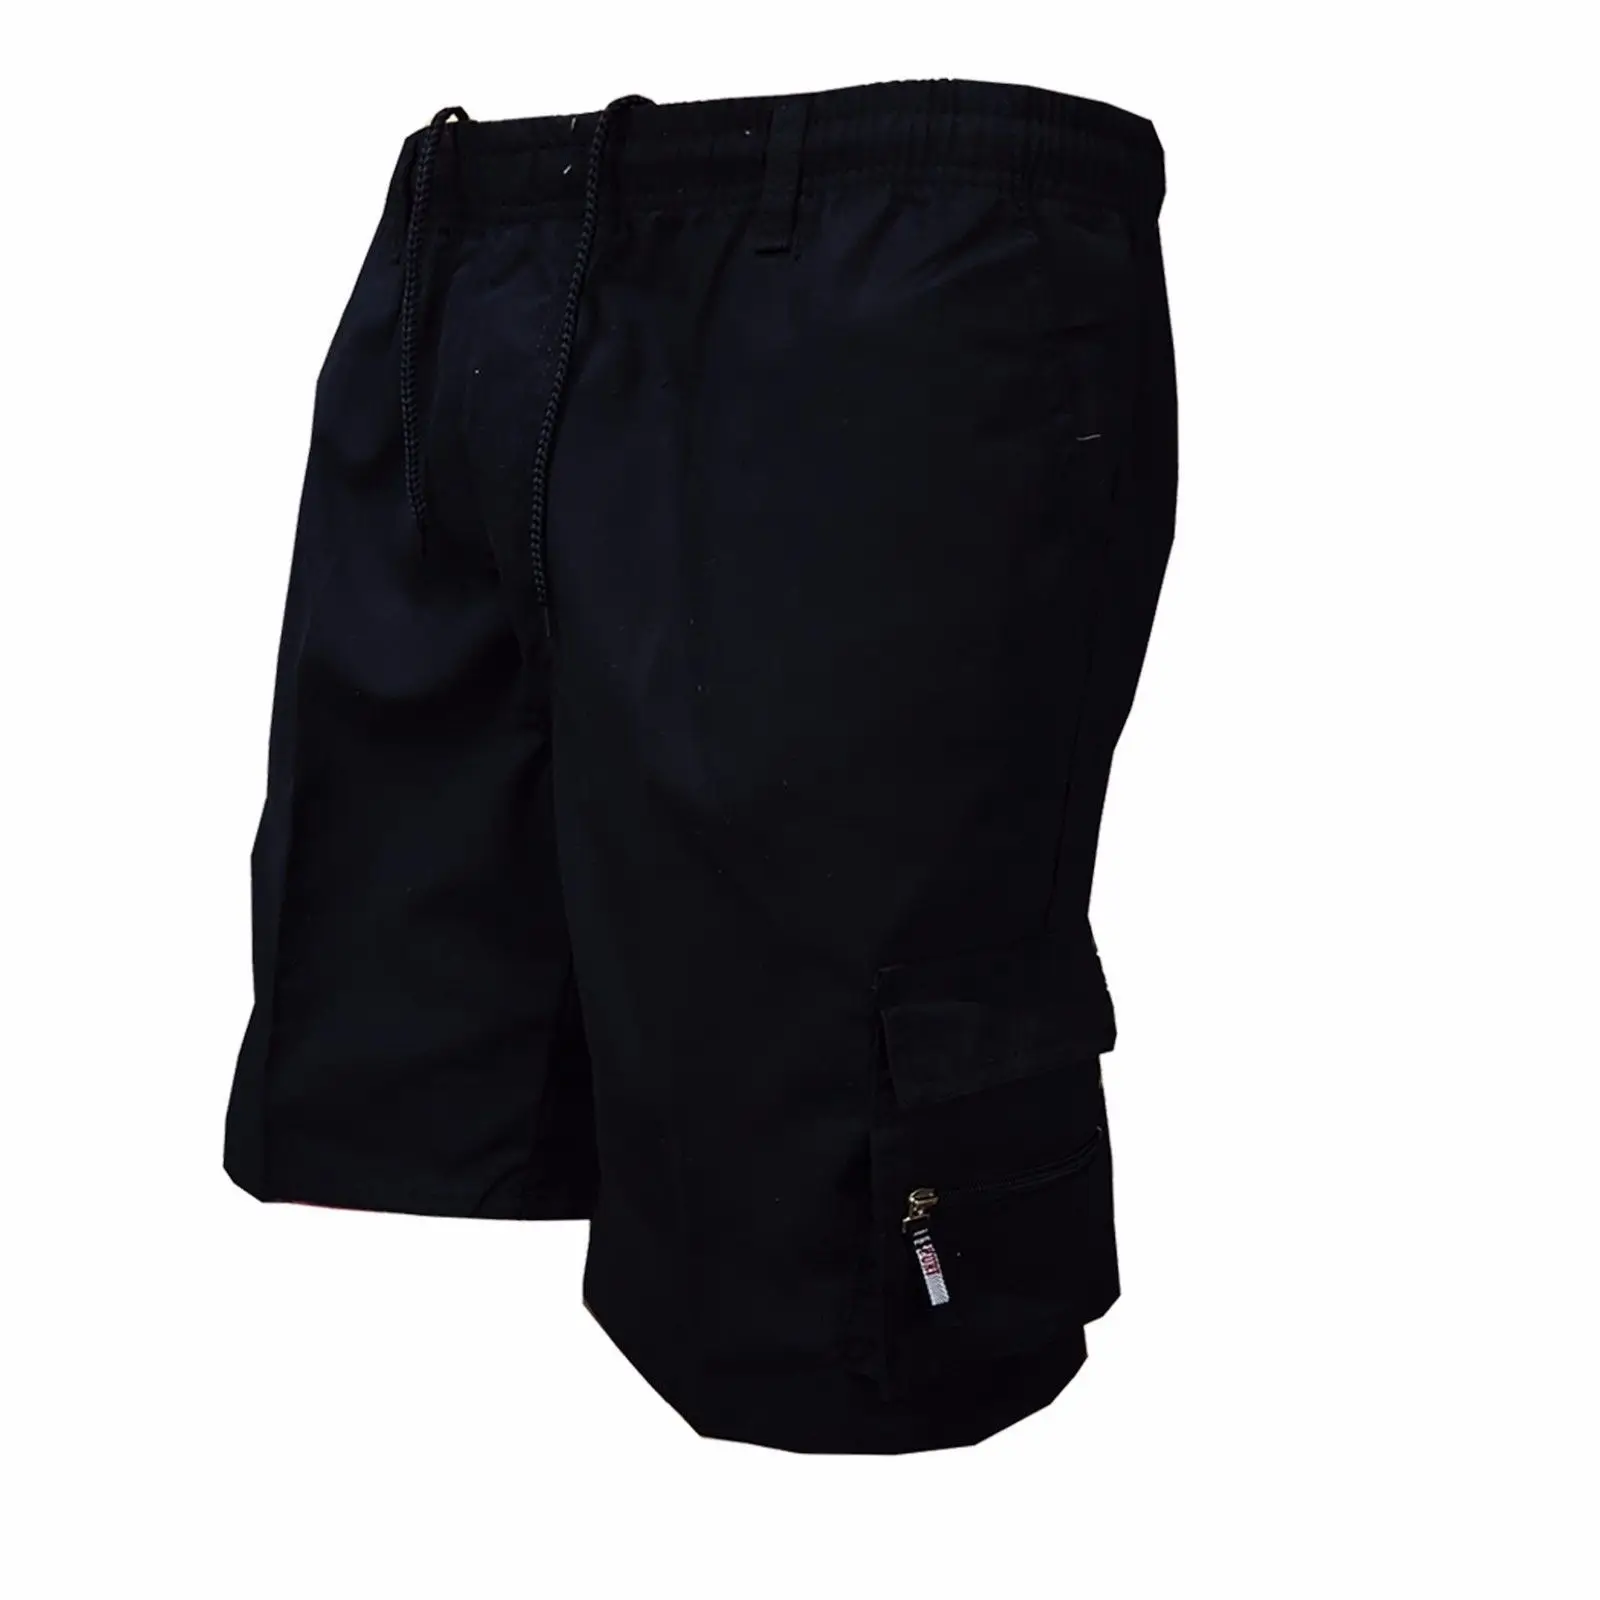 2023 summer New Mens Shorts Fitness Cotton Casual Drawstring Short Pants High Quality Shorts Men's Multi-pocket Sports Shorts